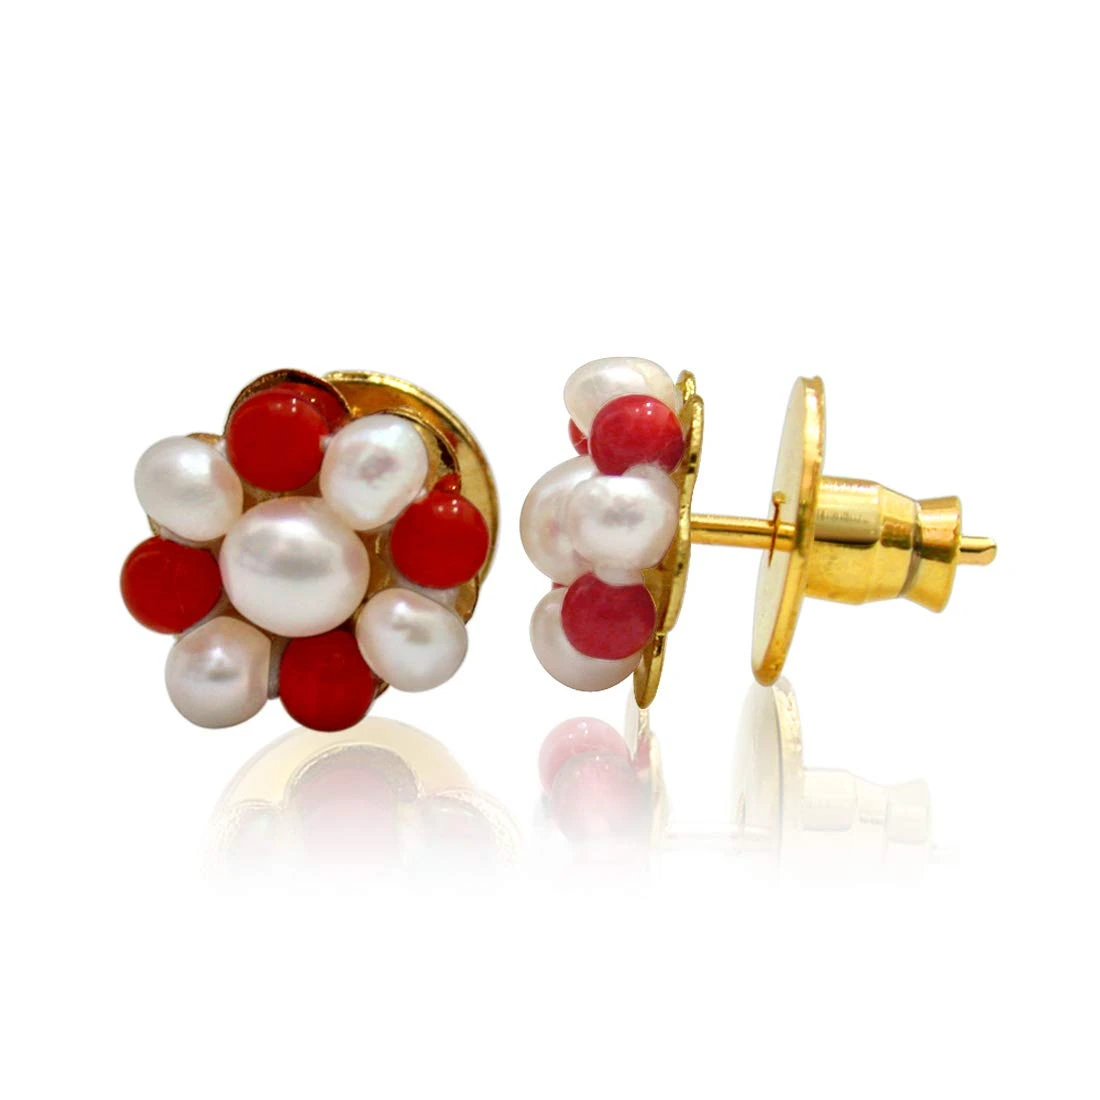 Real Freshwater Pearl & Red Coral Beads Kuda Jodi Earrings for Women (SE109)